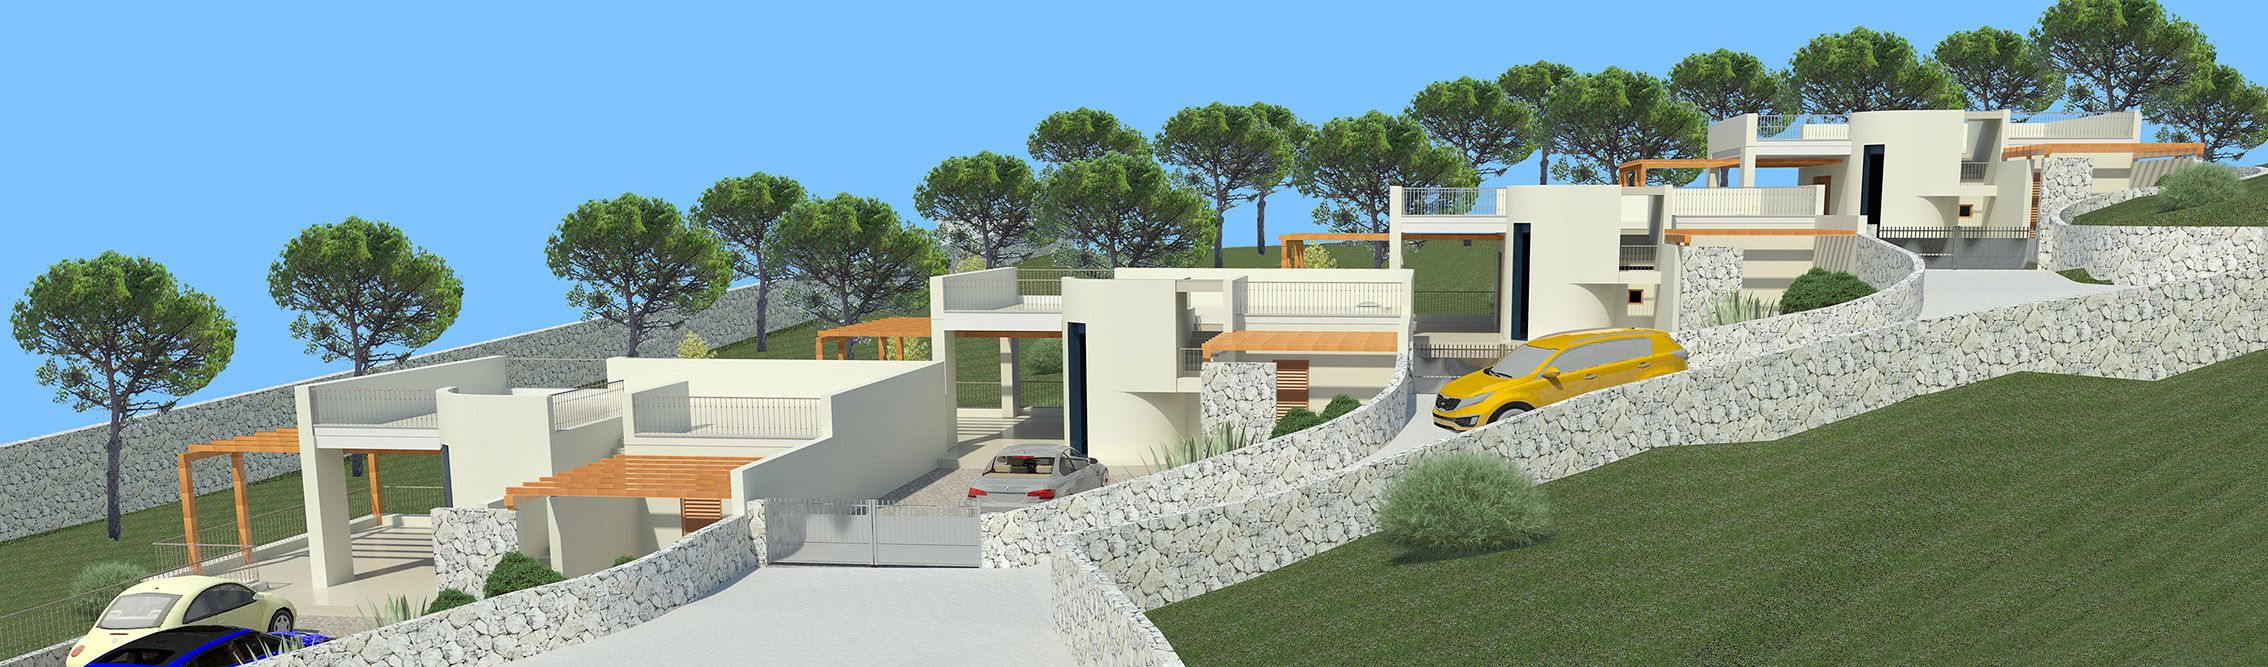 Unità Residenziali - Nardò, via Panoramica - Vista 3D 4 (web)